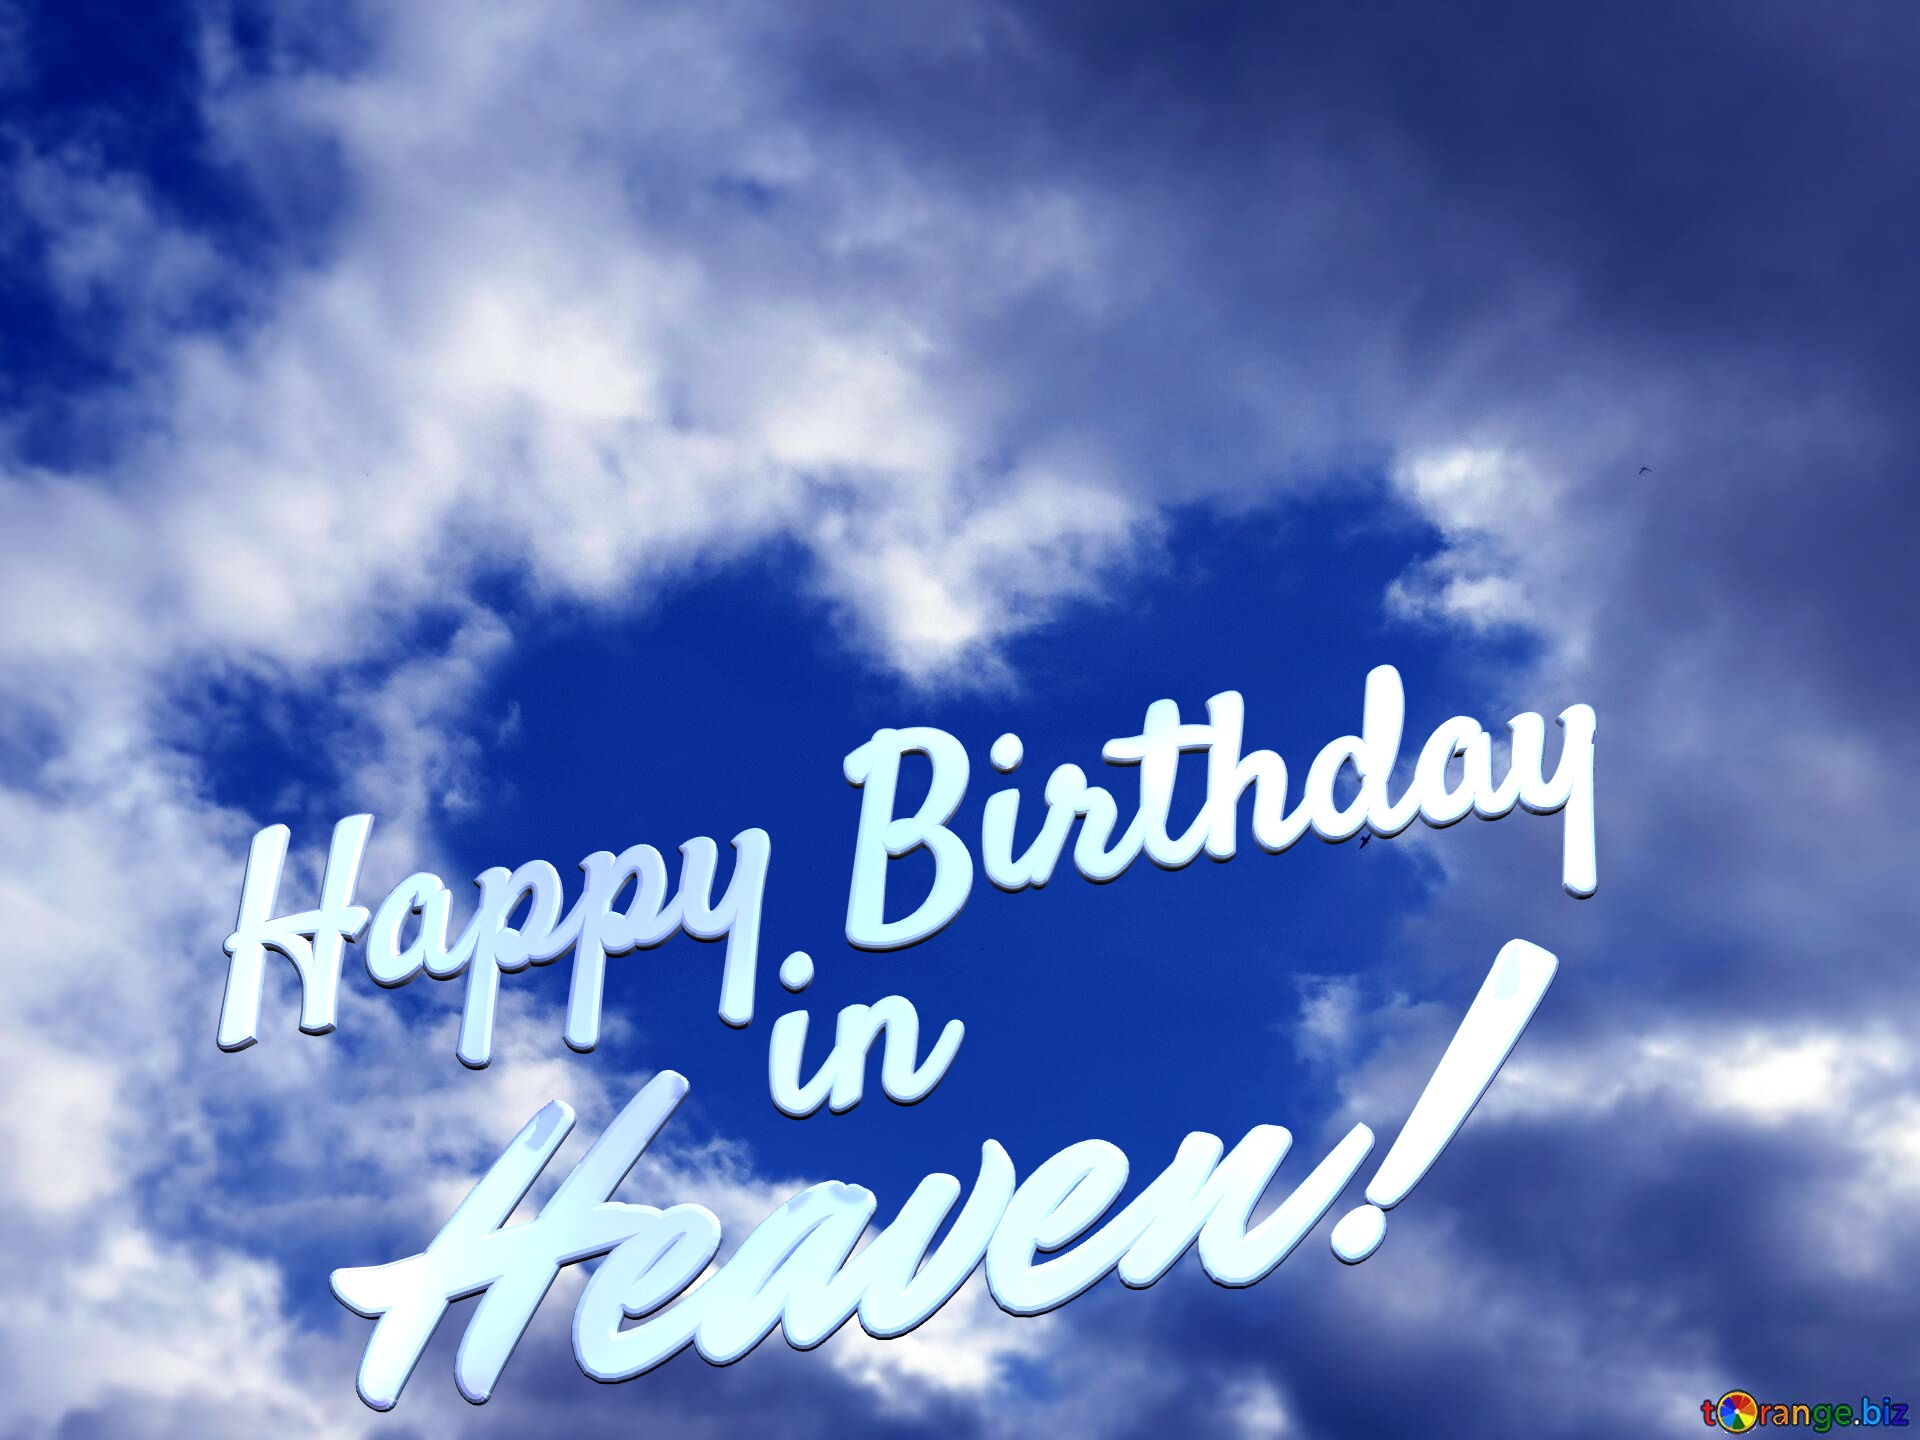 Happy Birthday To Heaven! Free Image - 3545